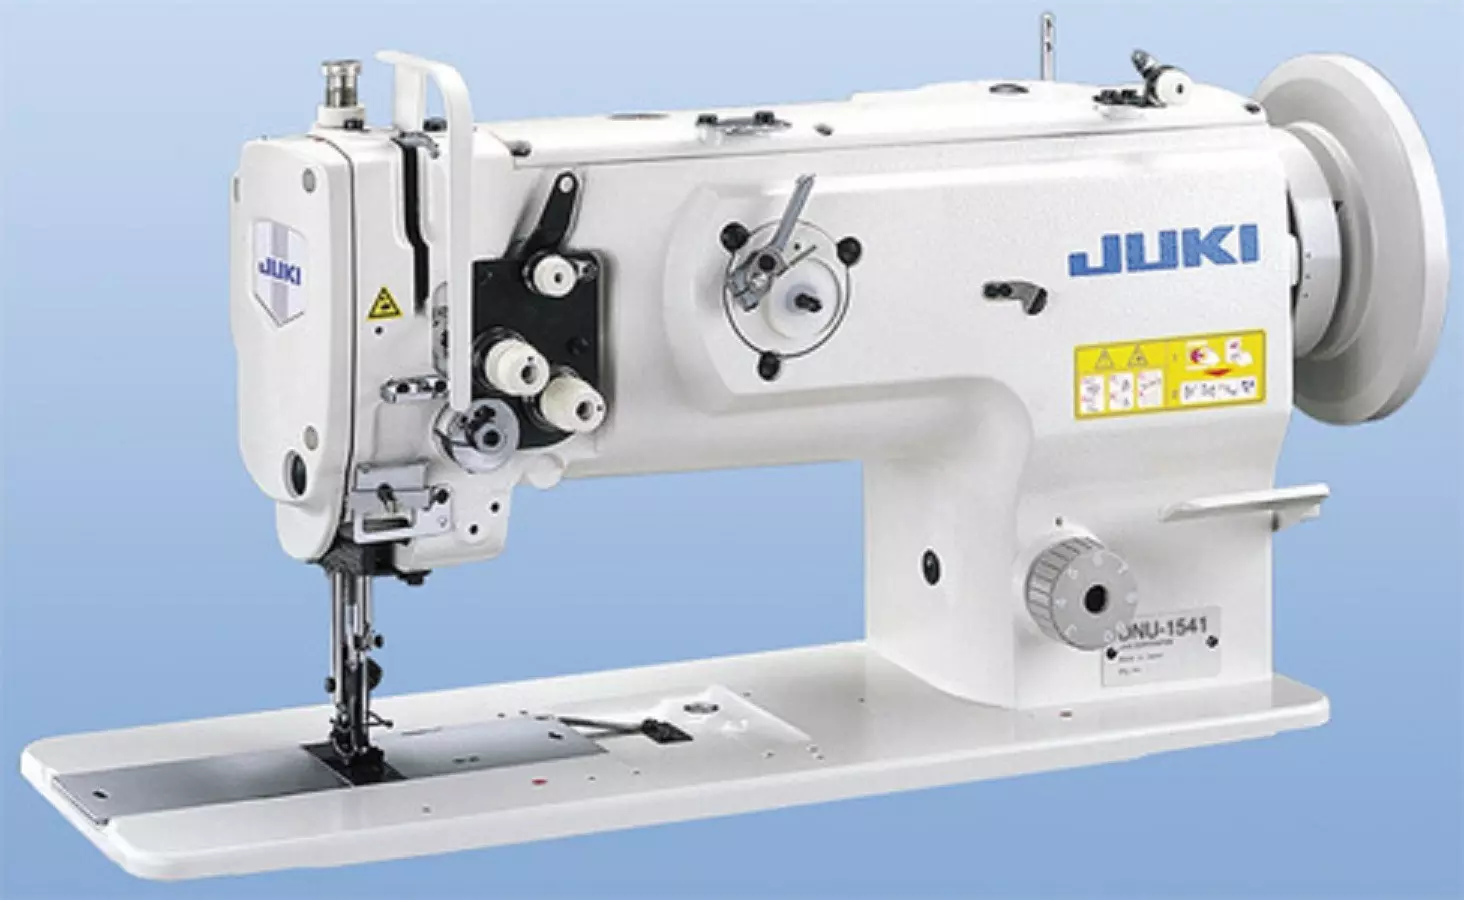 Juki Juki DNU 1541 Walking Foot Industrial Sewing Machine With Needle Position 